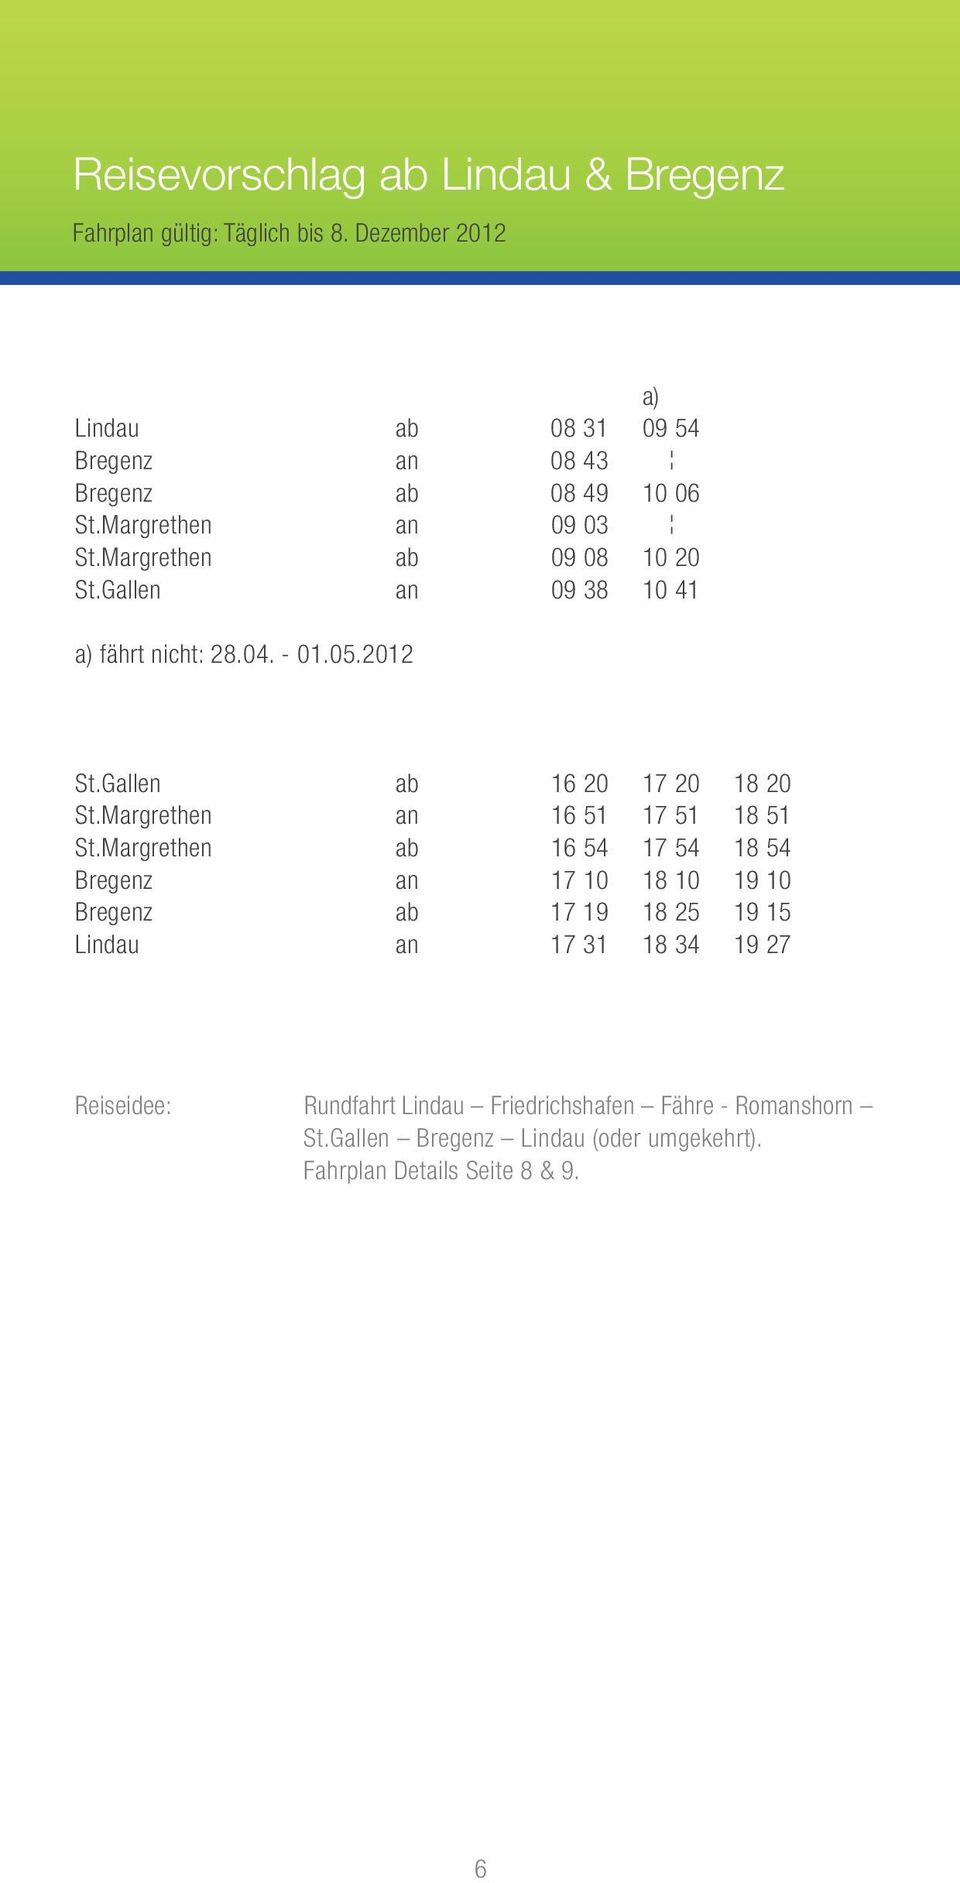 Gallen an 09 38 10 41 a) fährt nicht: 28.04. - 01.05.2012 St.Gallen ab 16 20 17 20 18 20 St.Margrethen an 16 51 17 51 18 51 St.